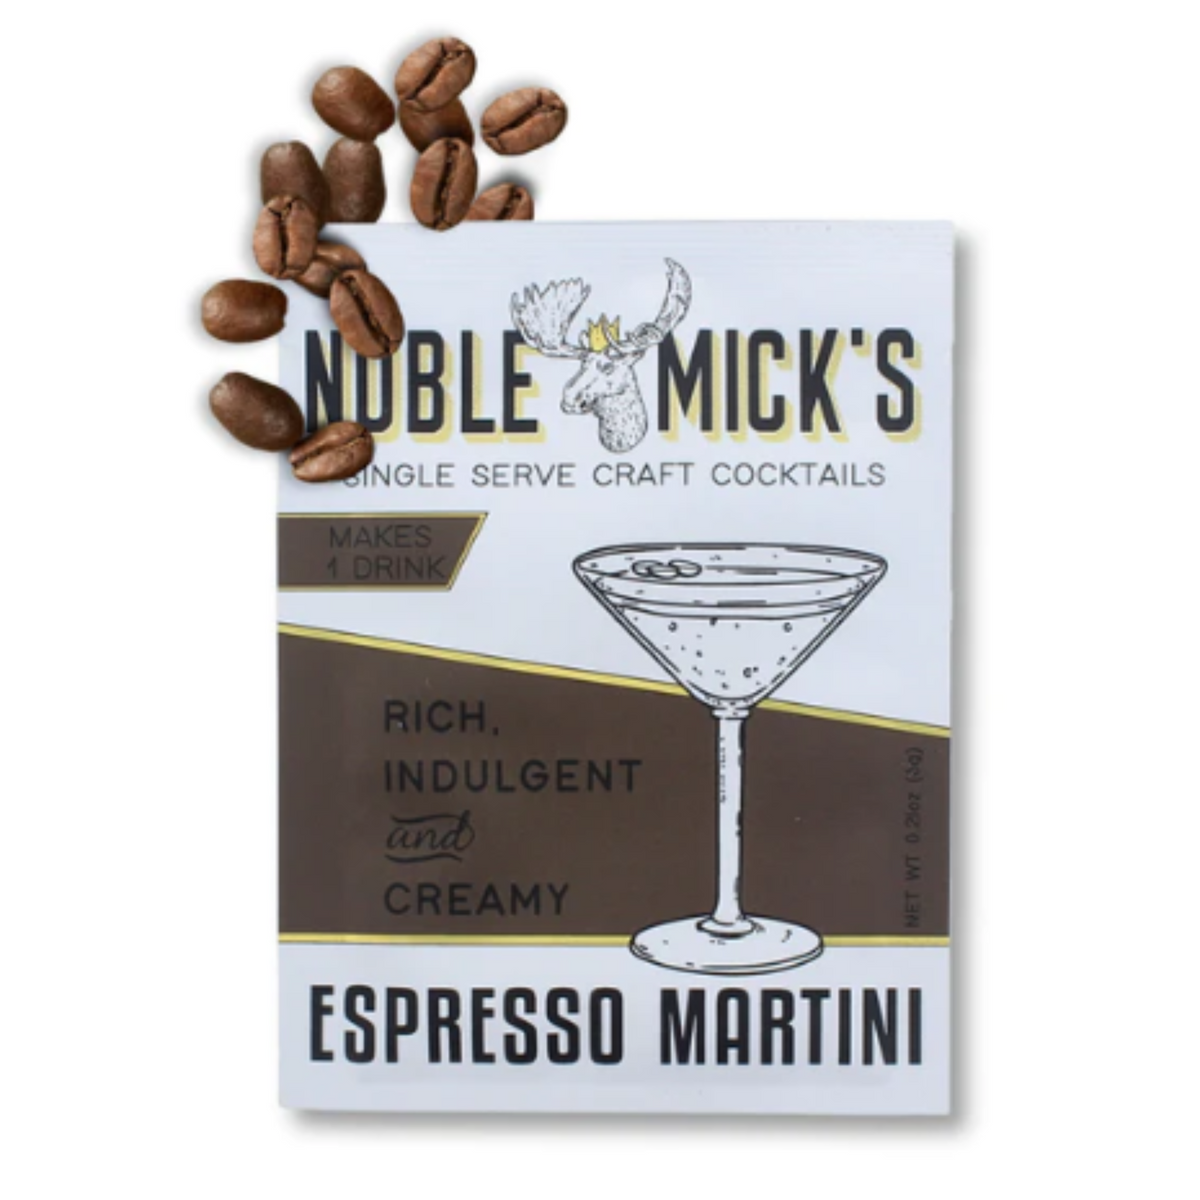 Espresso Martini - single serve craft cocktails